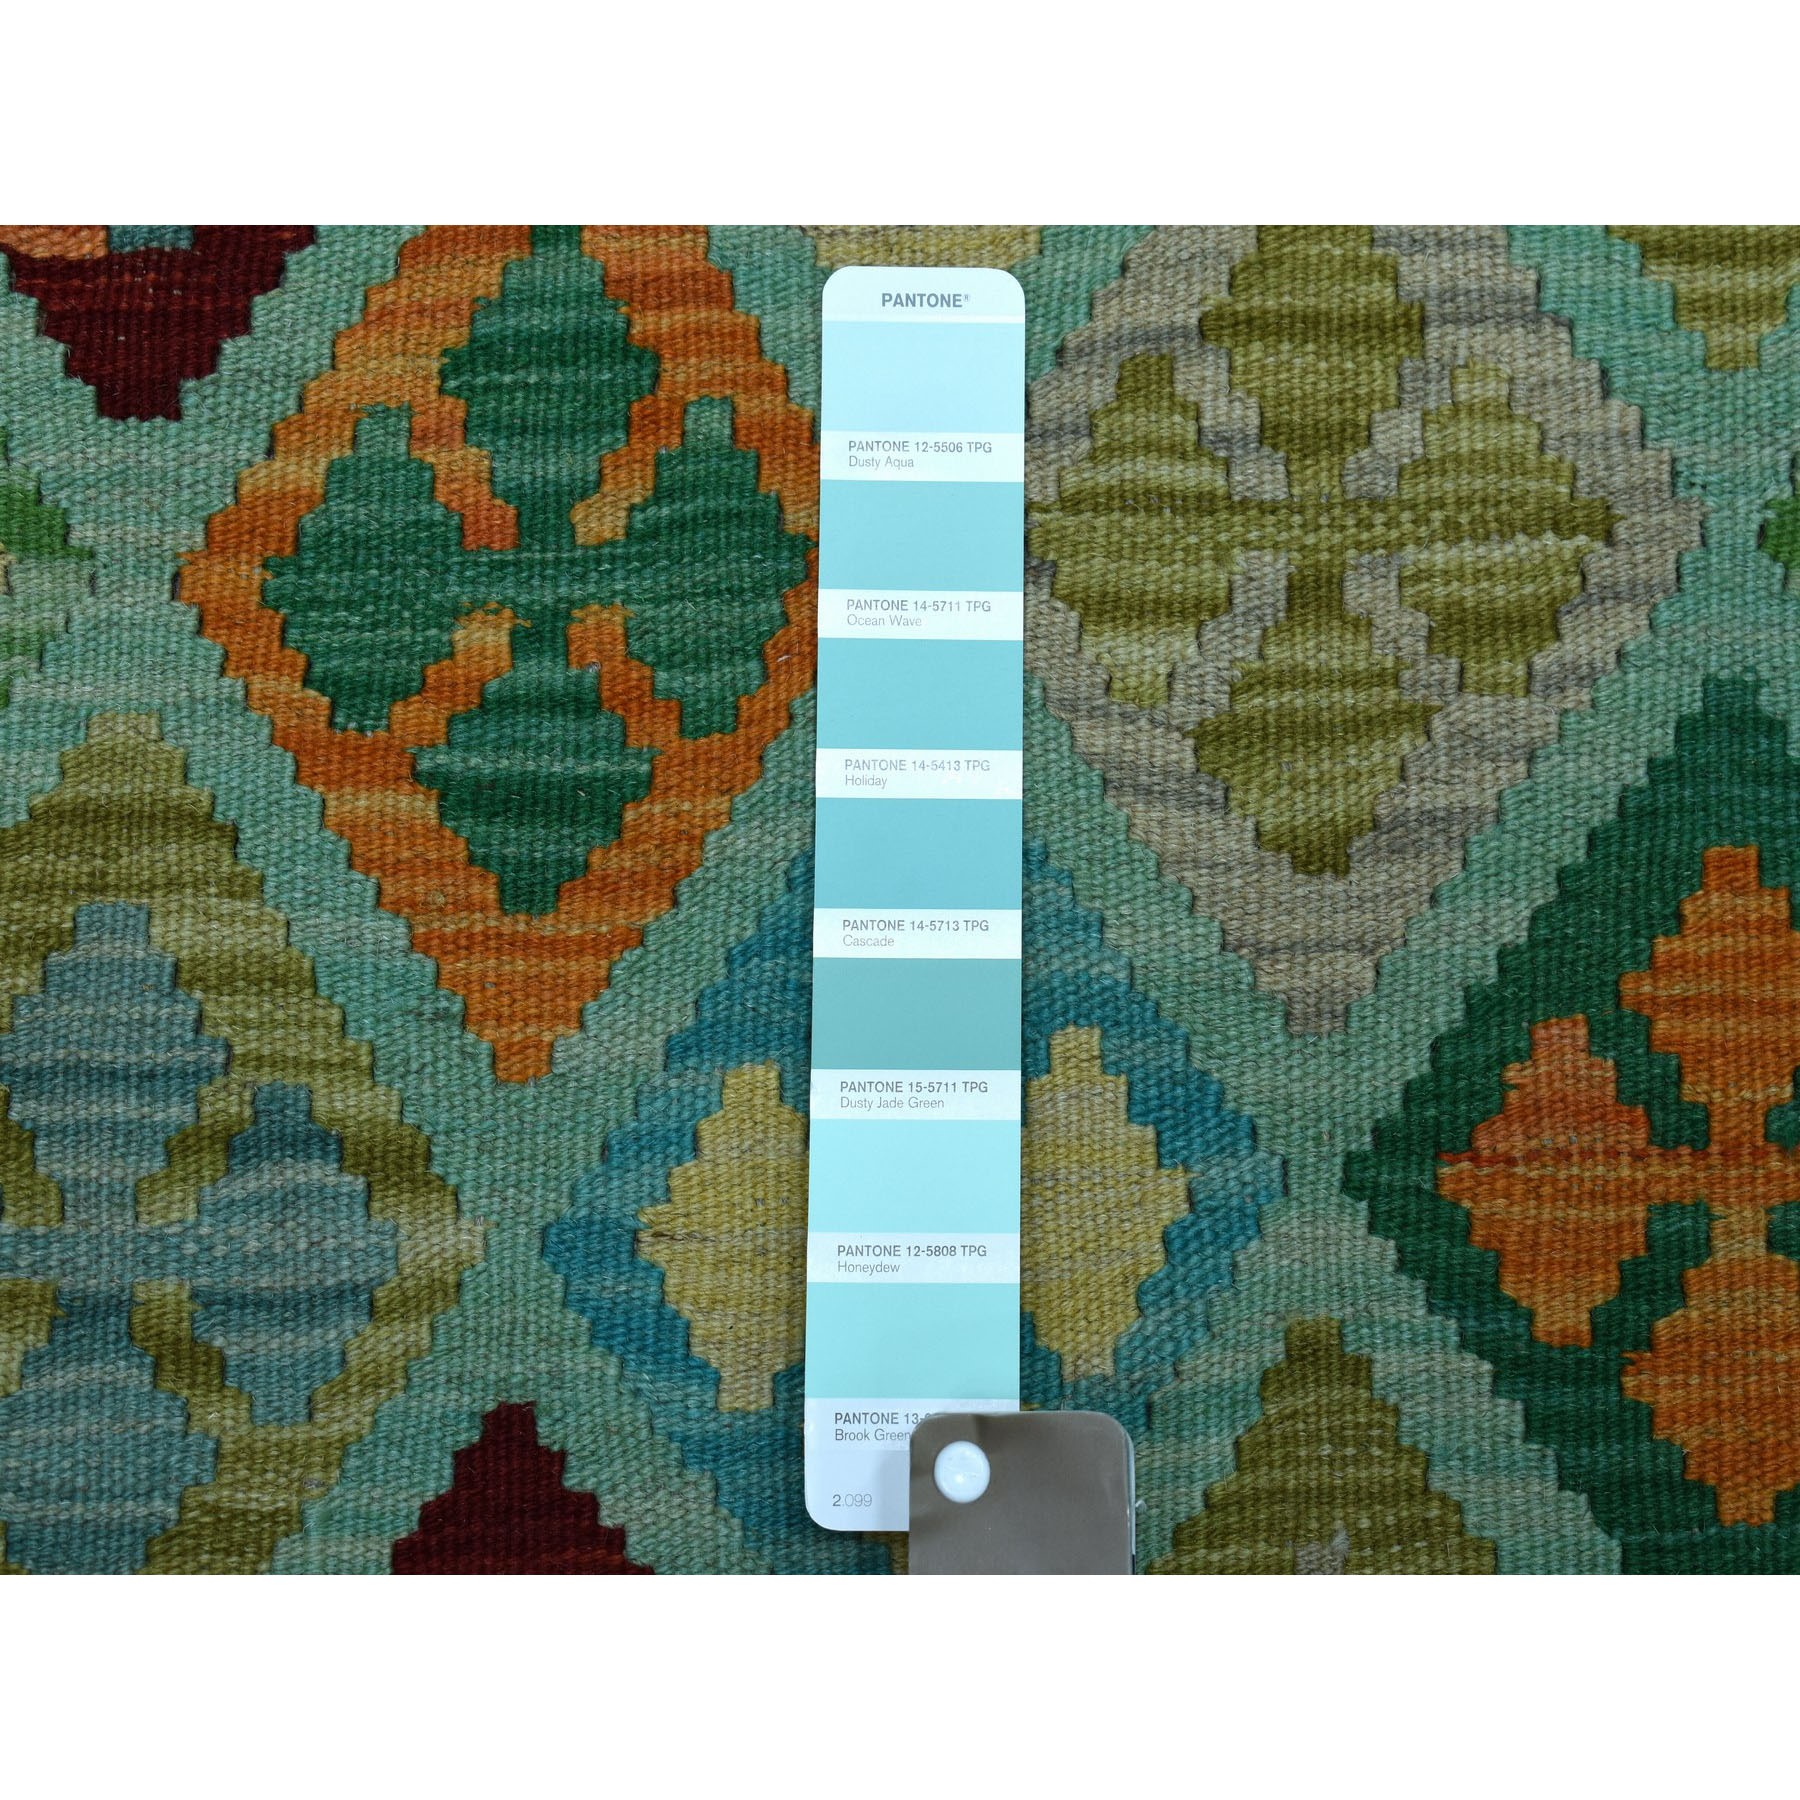 10-6 x13-1  Hand Woven Colorful Afghan Kilim Pure Wool Oriental Rug 